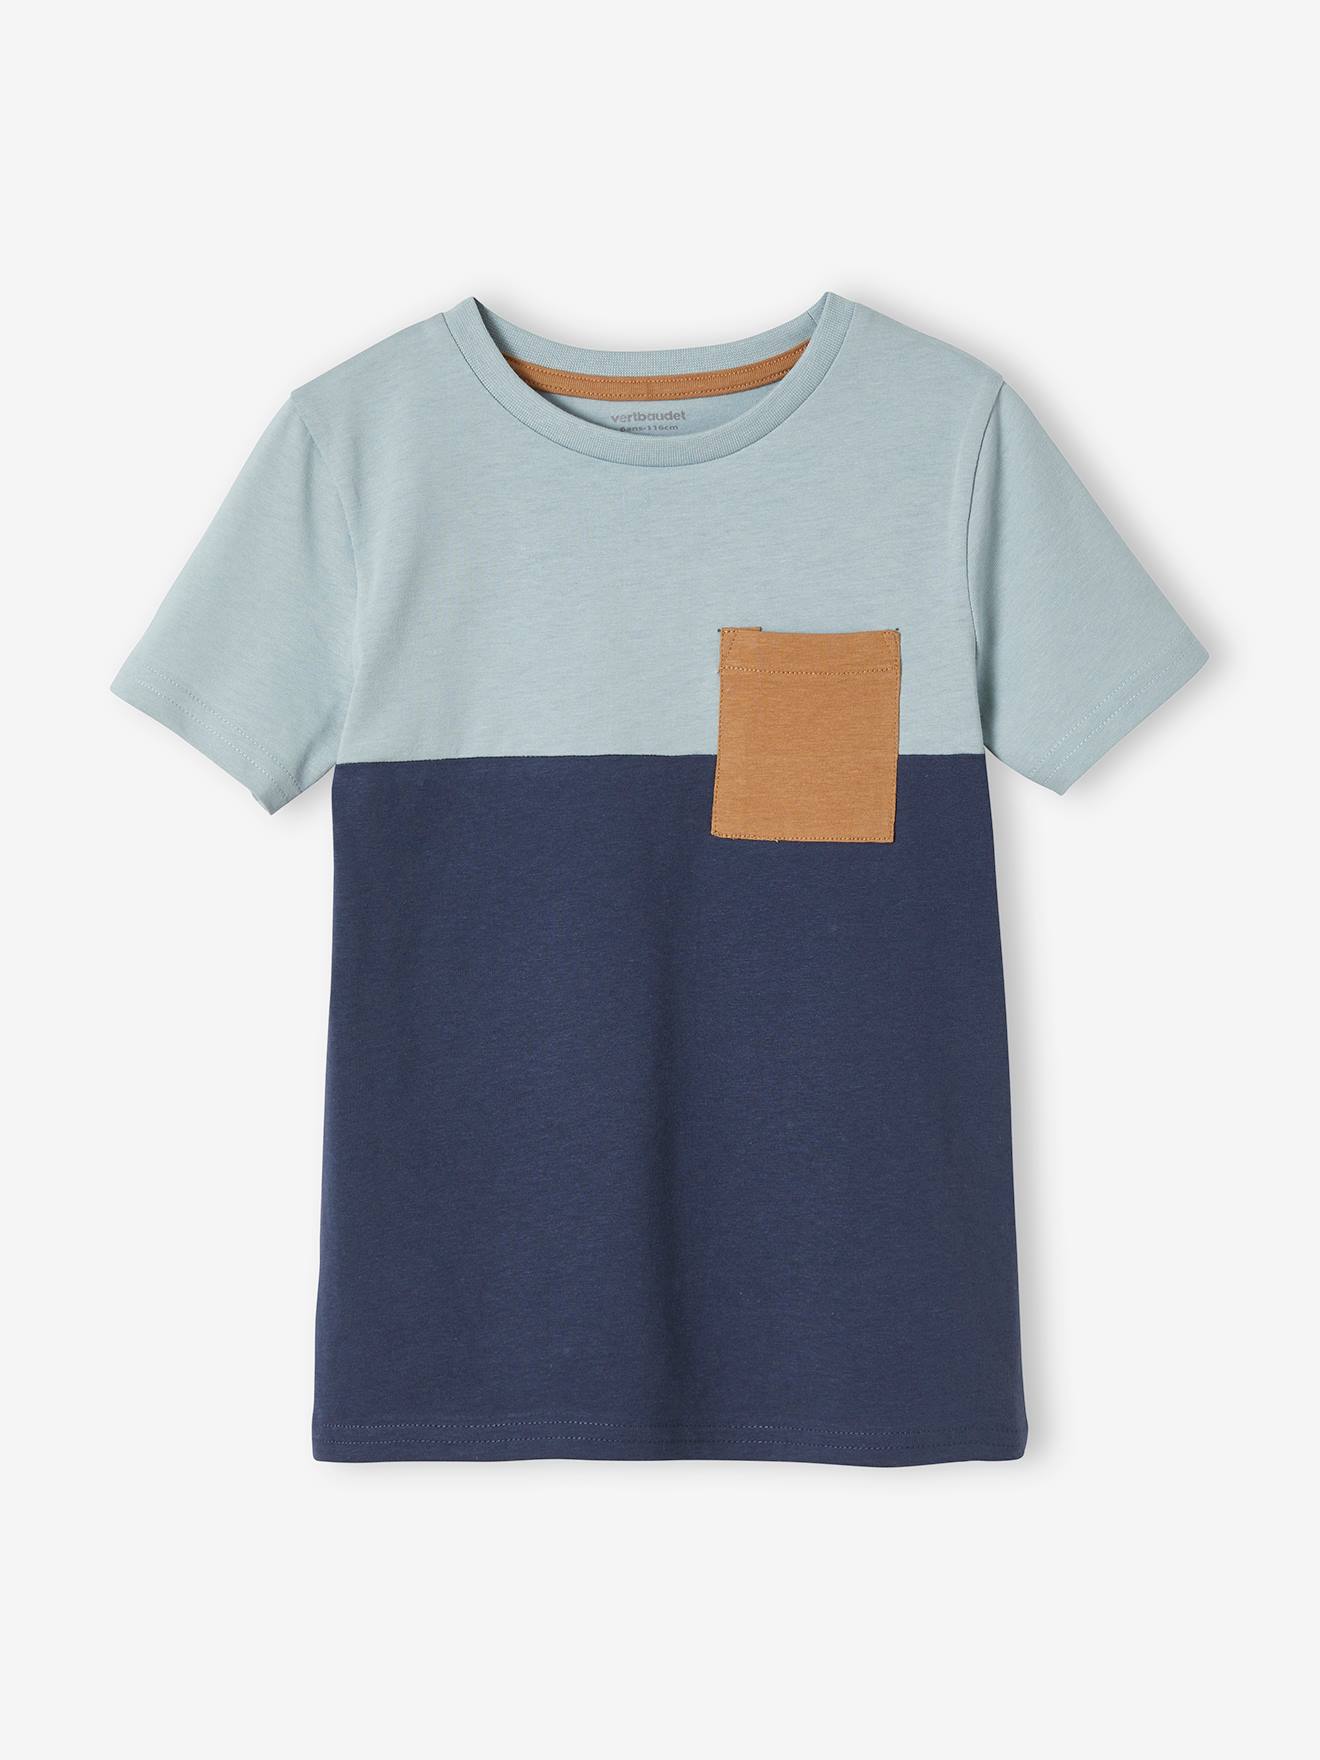 Colourblock T-Shirt for Boys blue medium solid with design